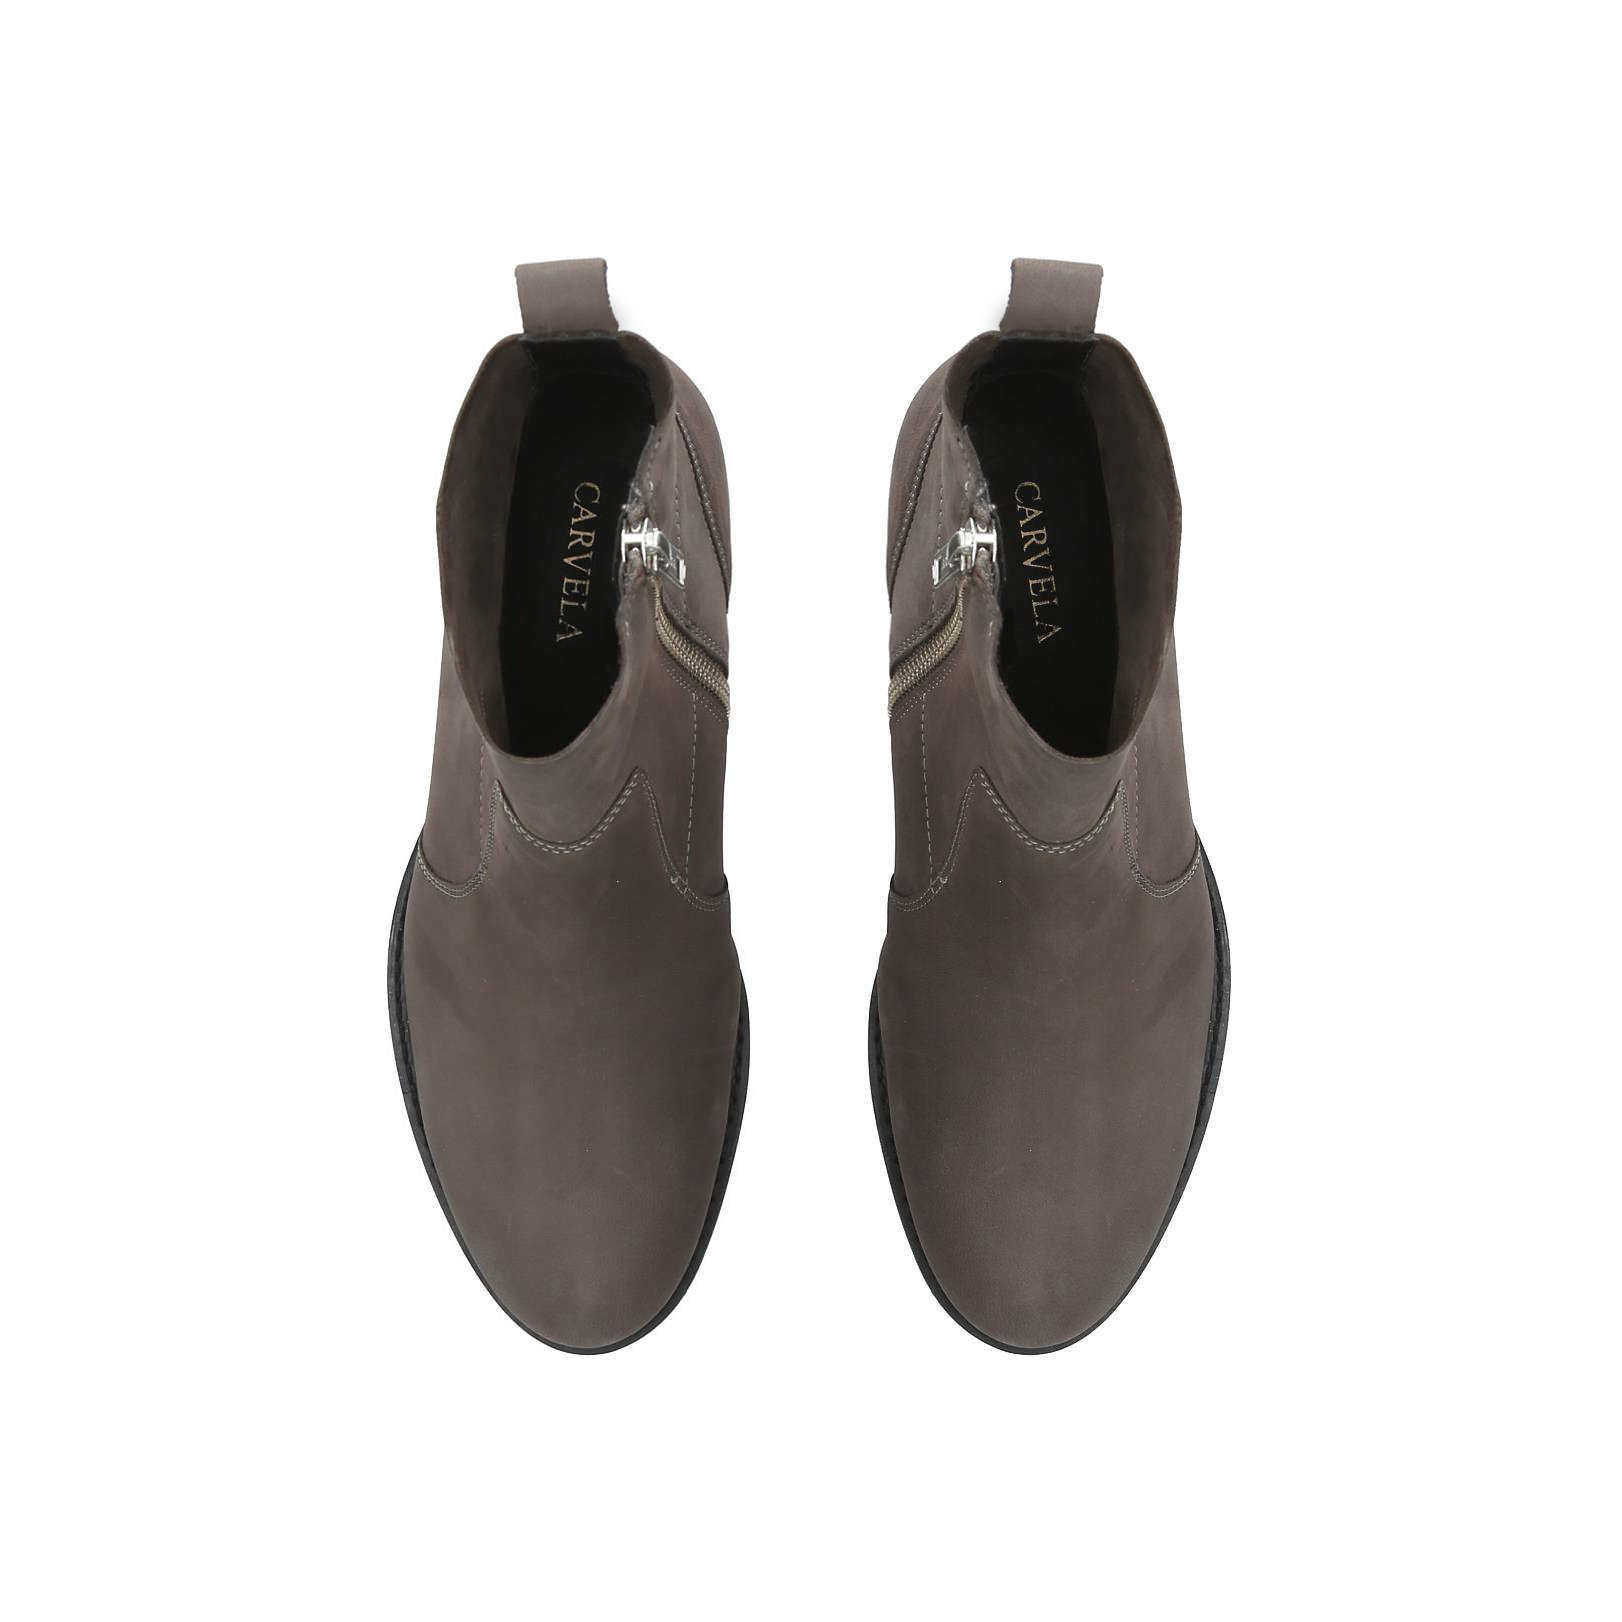 carvela grey ankle boots